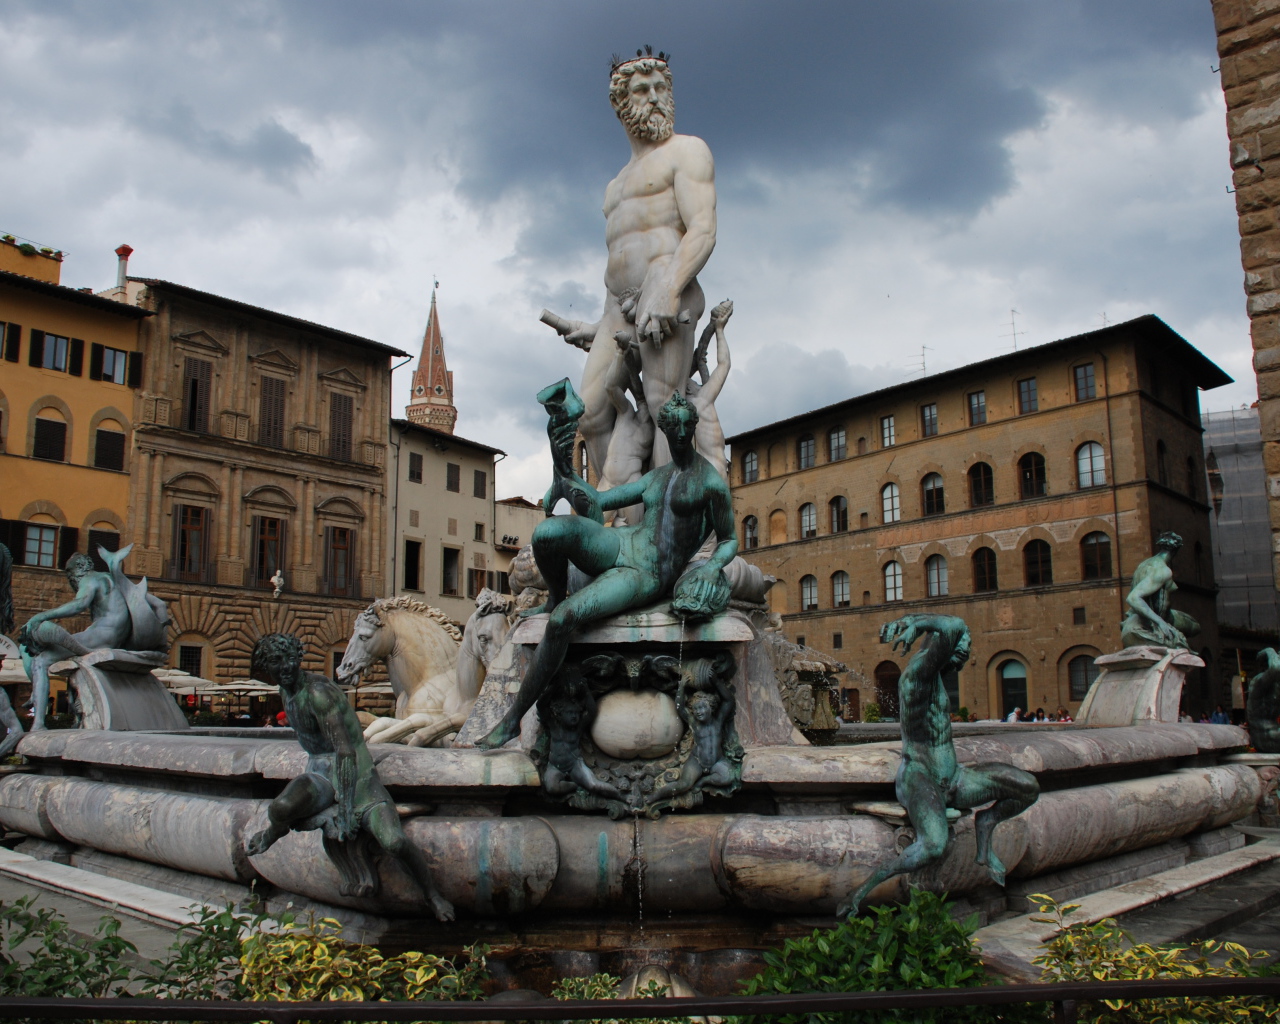 Памятник на фоне зданий во Флоренции, Италия